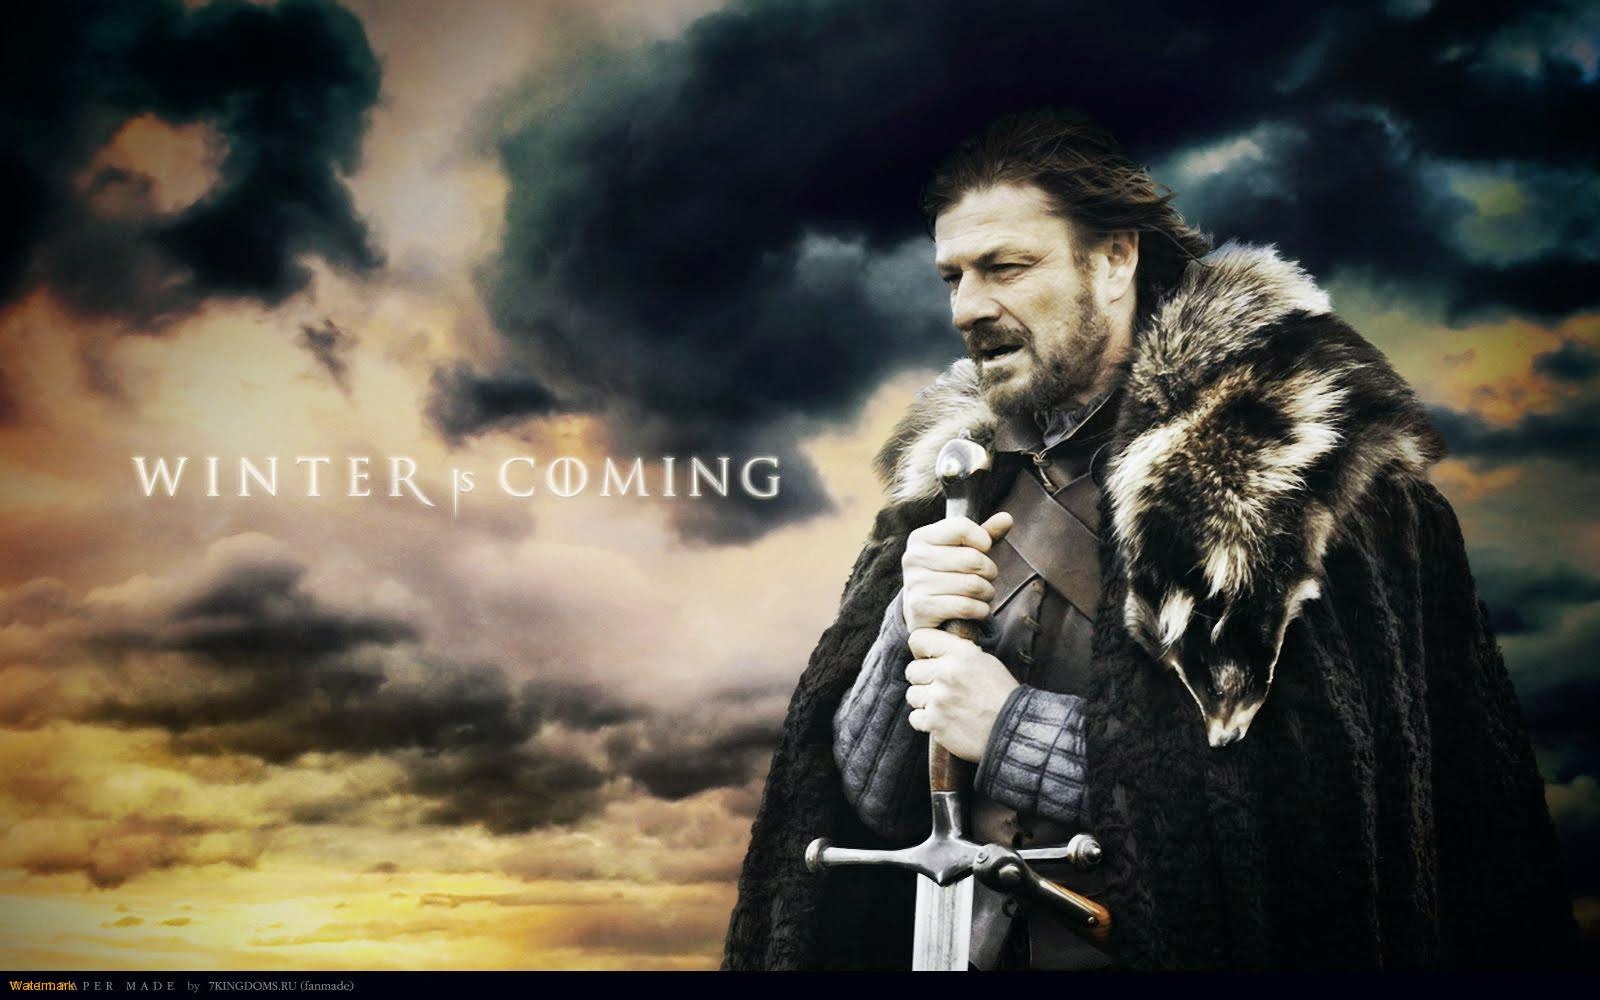 Eddard-Ed-Stark-Winter-is-Coming-1.jpeg